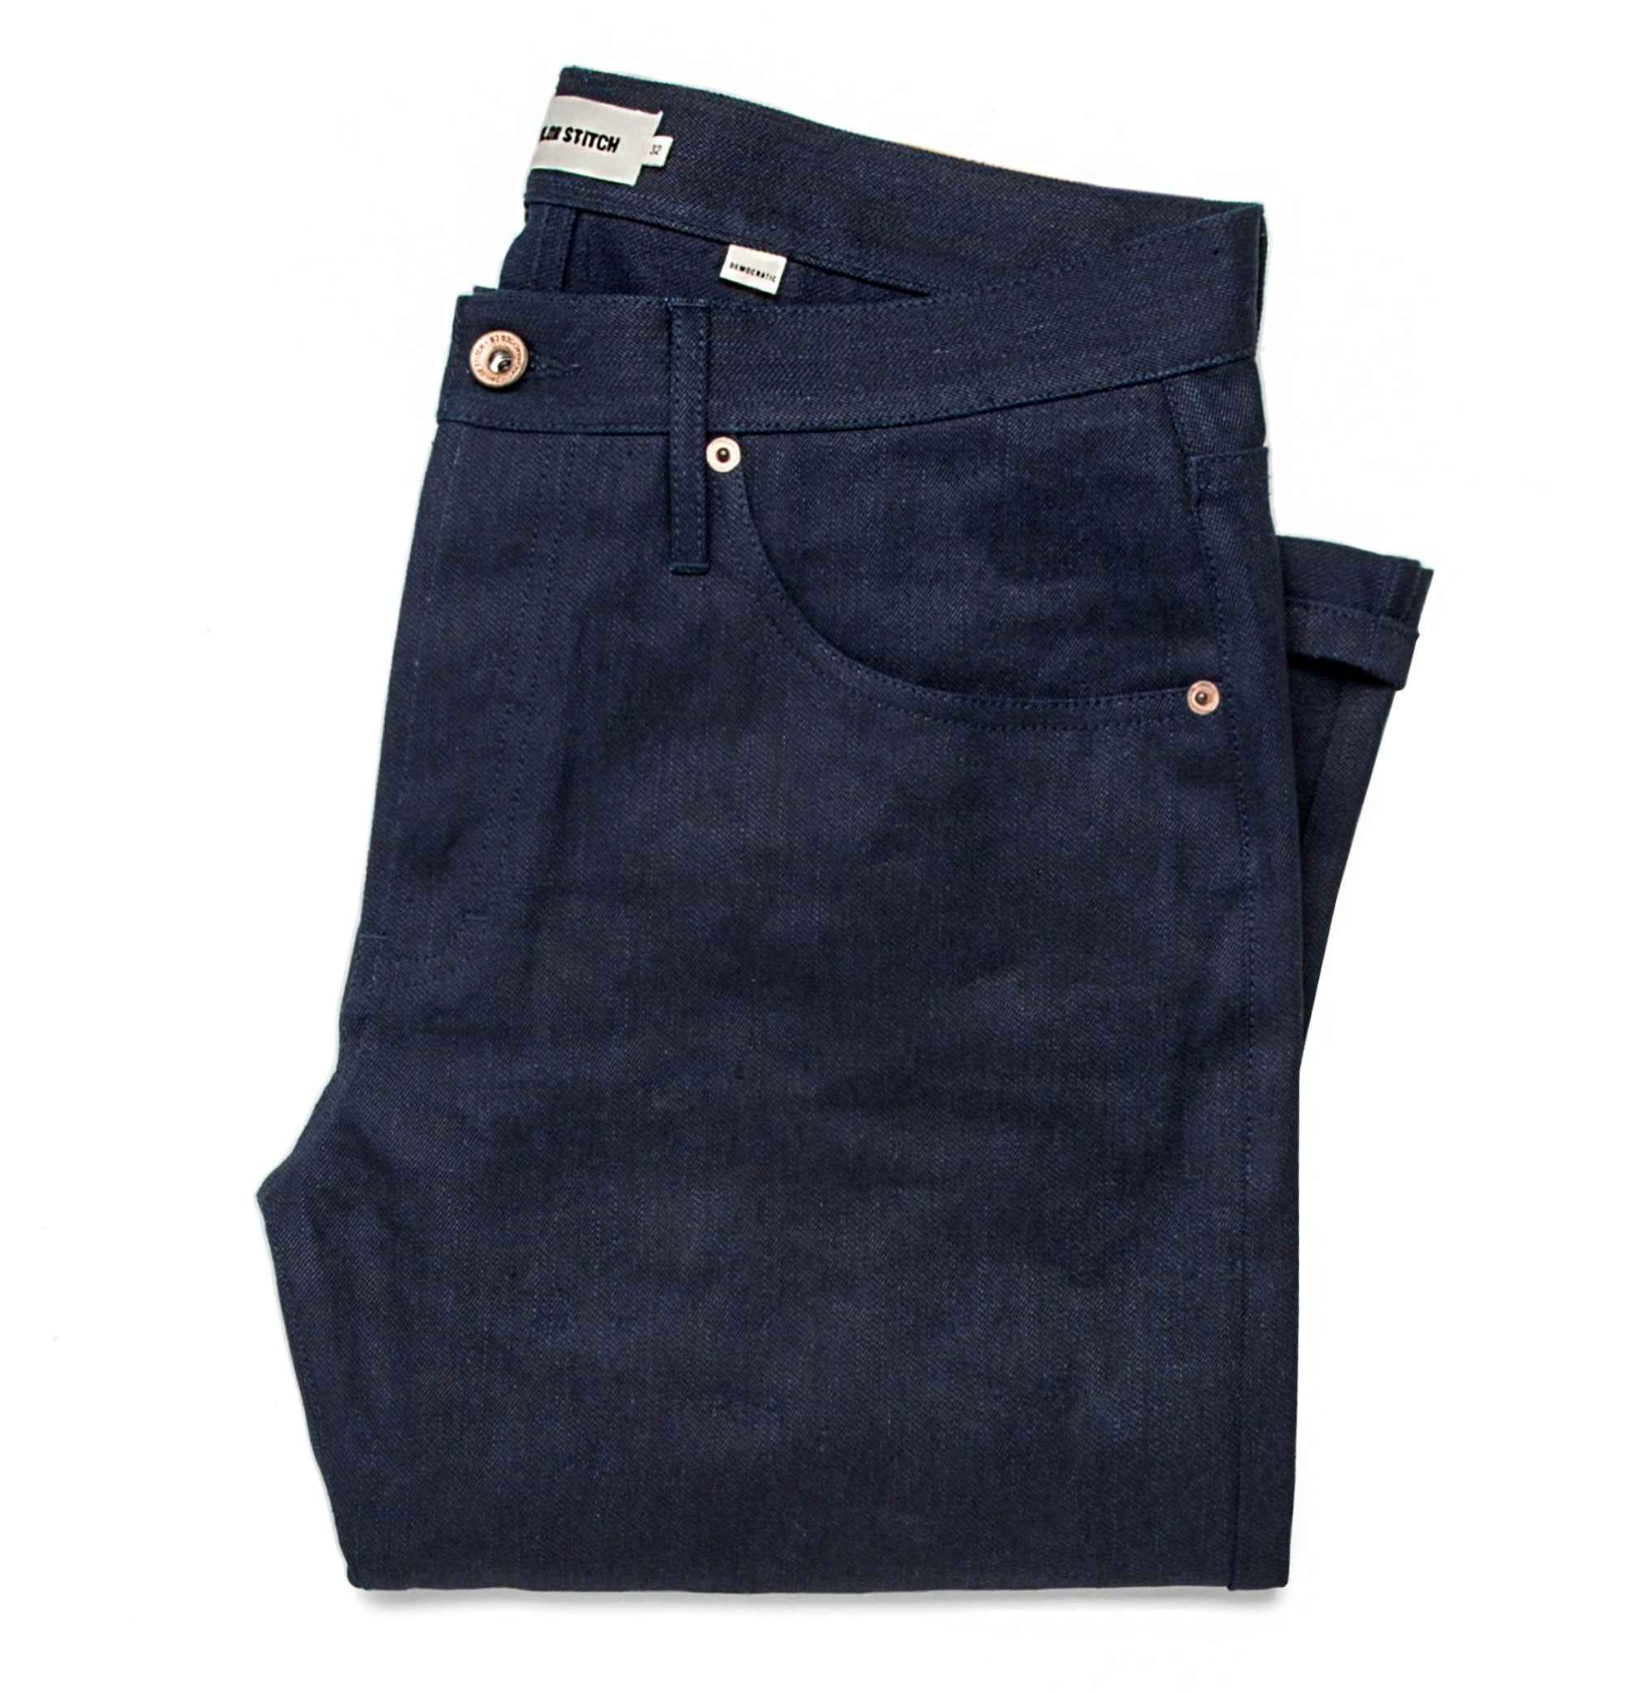 Taylor Stitch Democratic Jean in Double Indigo Standard